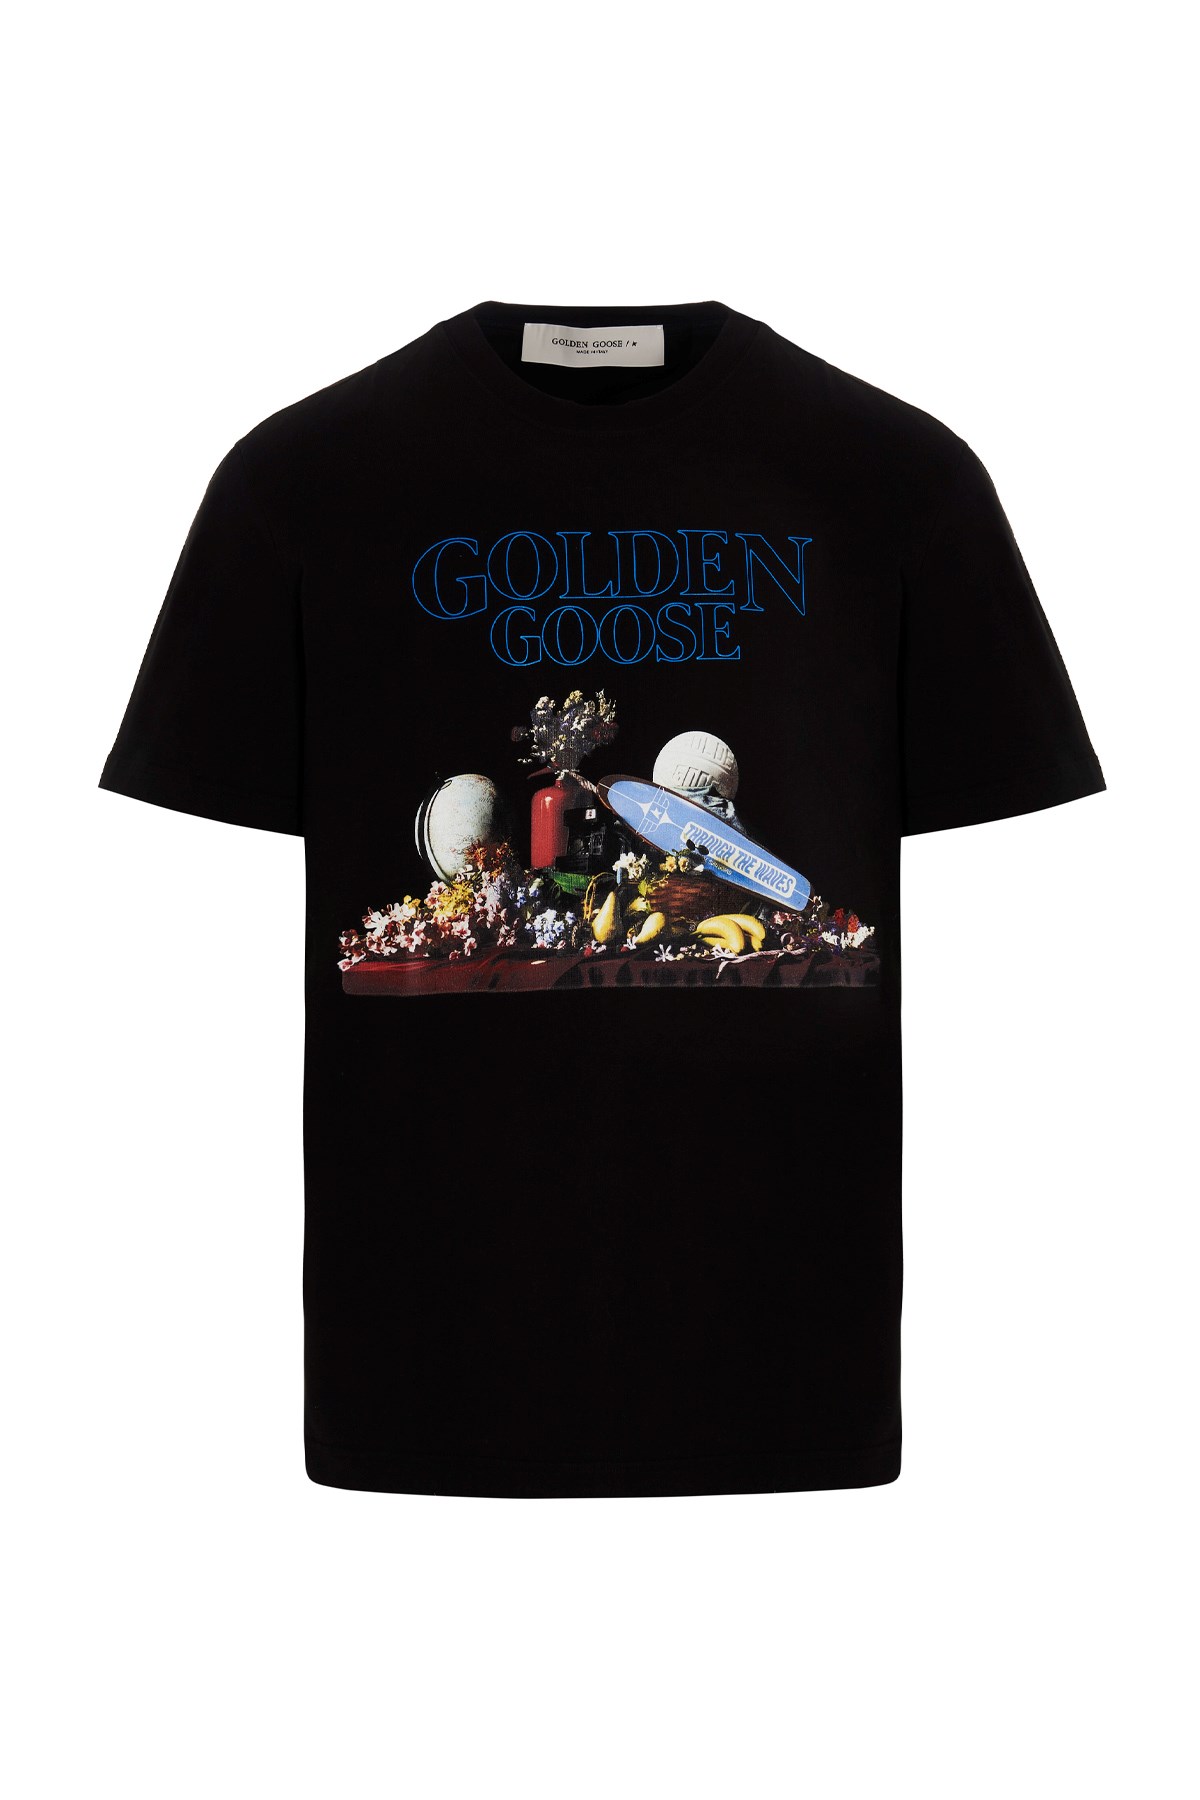 GOLDEN GOOSE 'Golden Goose Toys’ T-Shirt